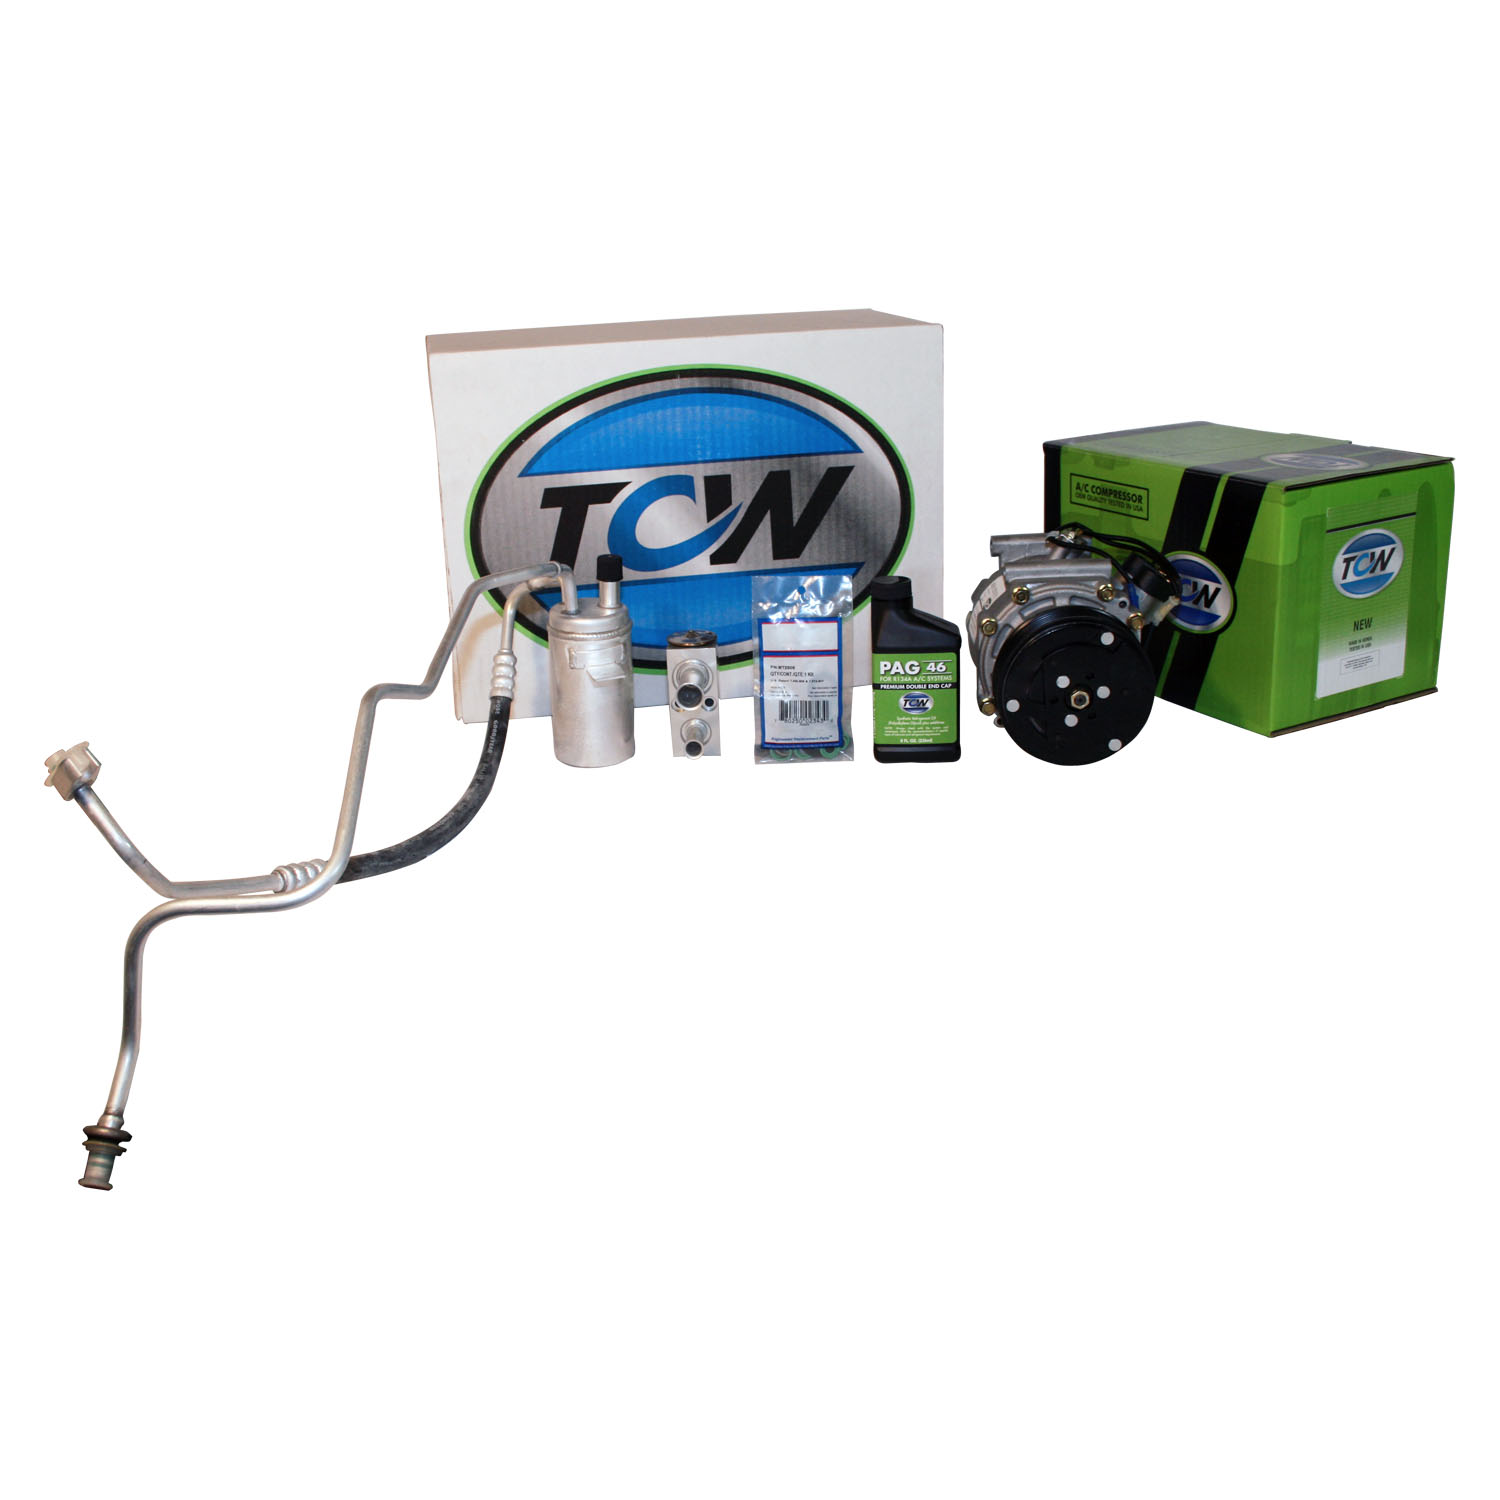 TCW Vehicle A/C Kit K1000468N New Product Image field_60b6a13a6e67c